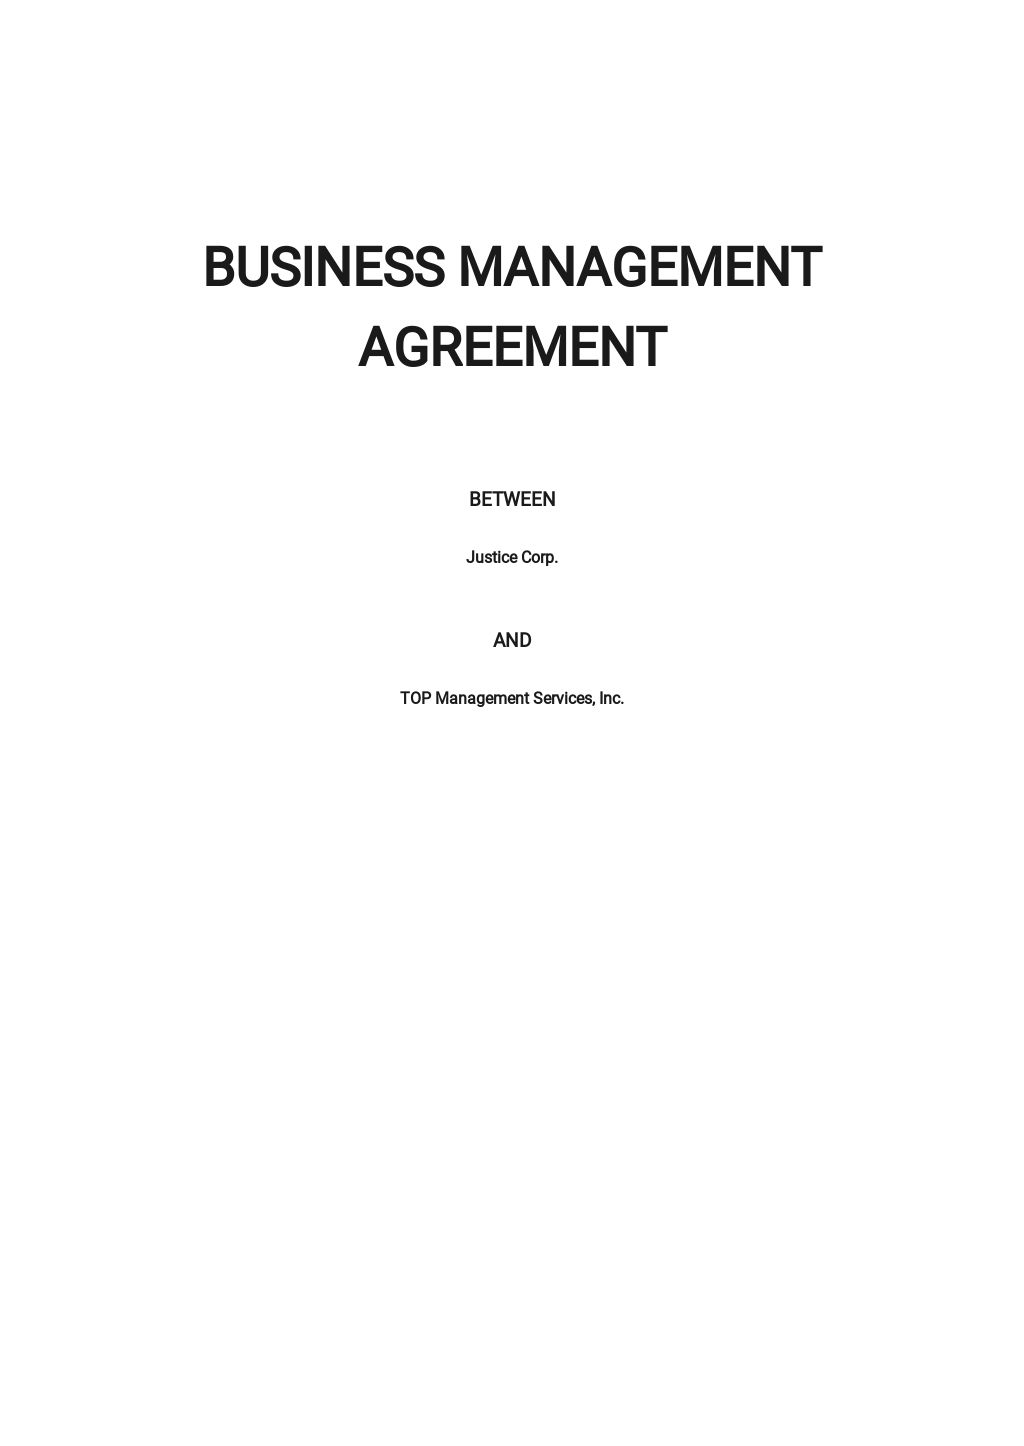 Business Management Agreement Template.jpe